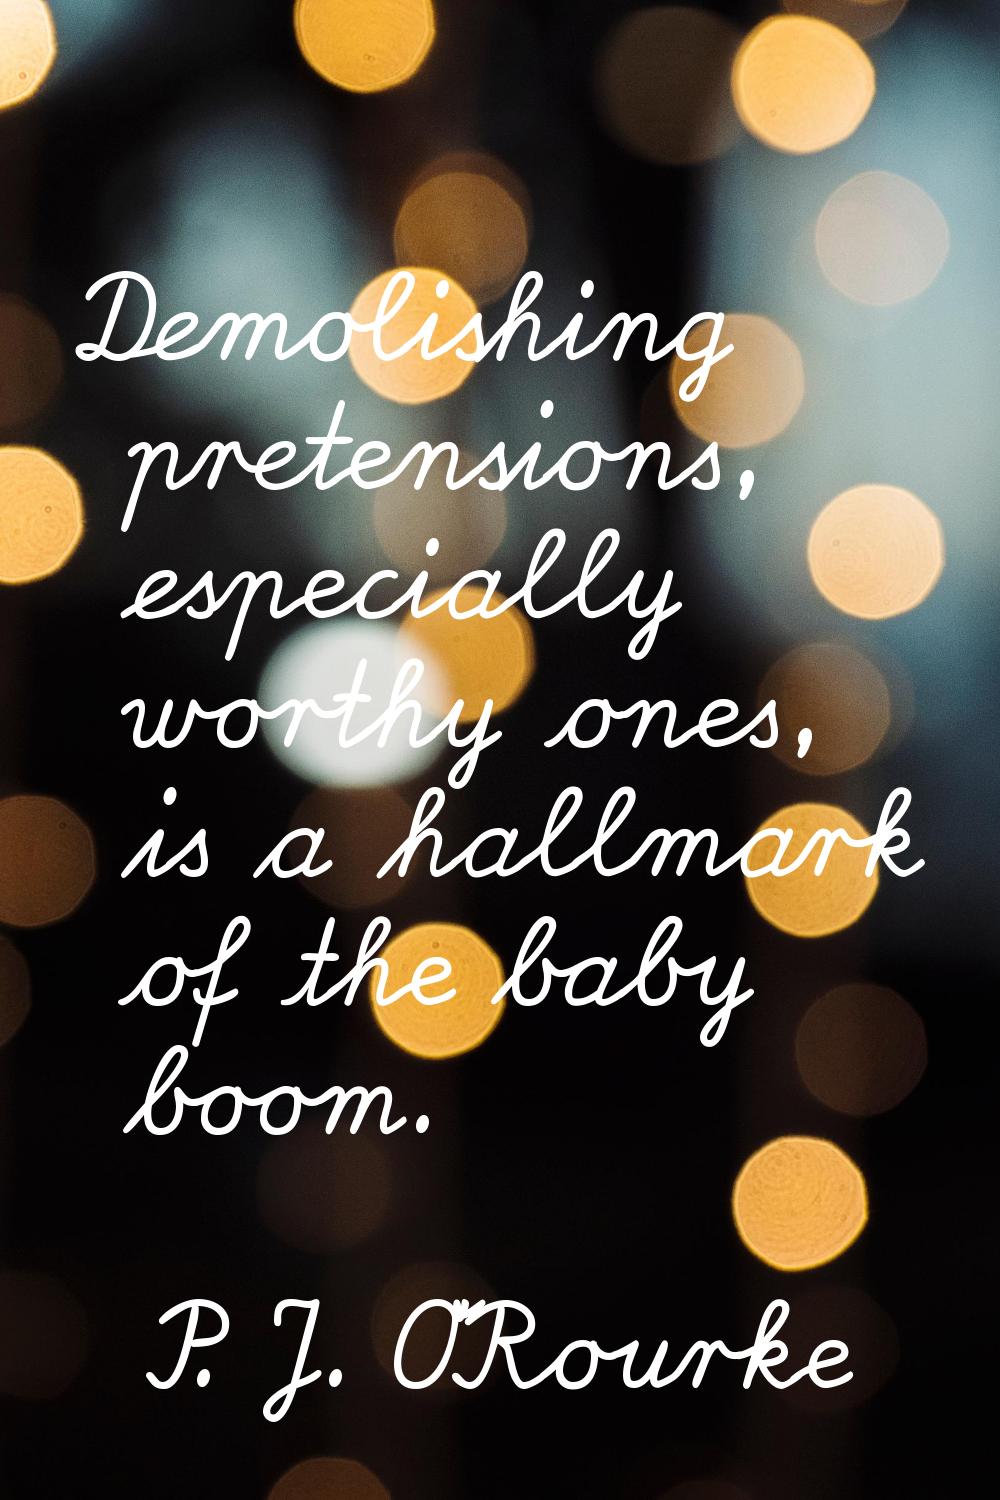 Demolishing pretensions, especially worthy ones, is a hallmark of the baby boom.